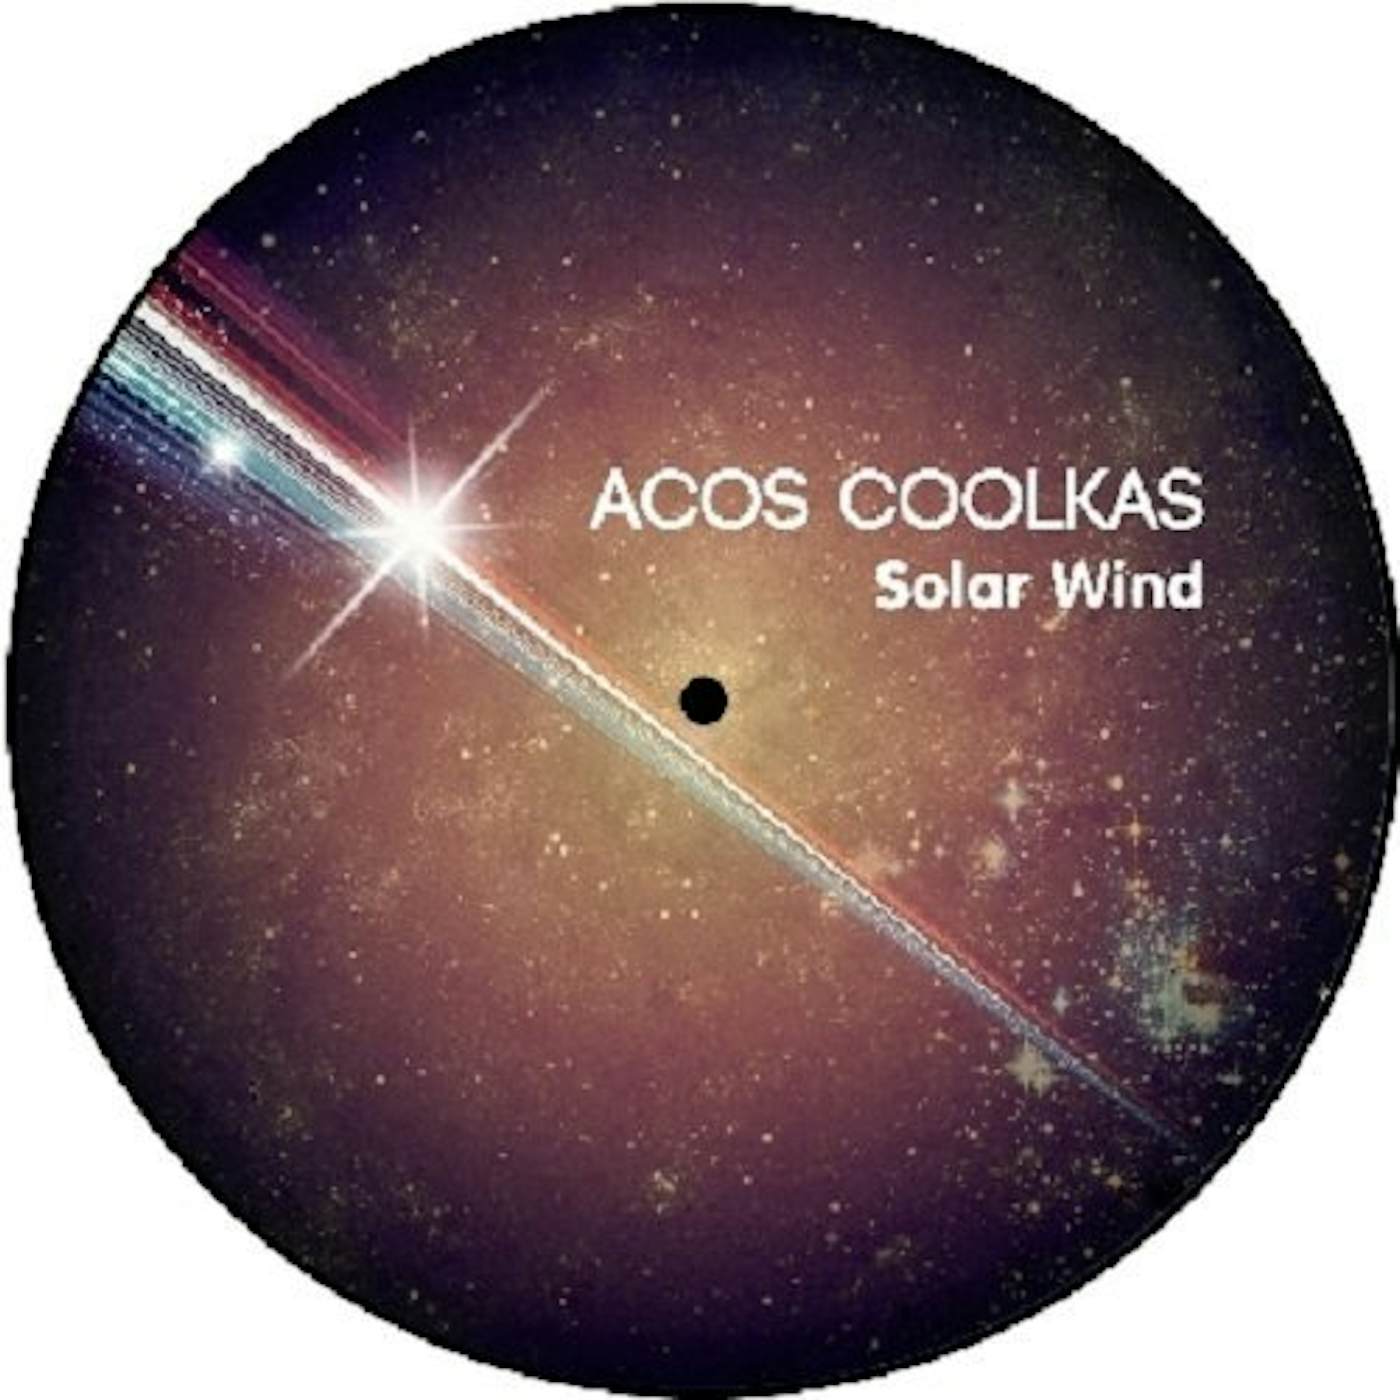 Acos CoolKAs Solar Wind Vinyl Record